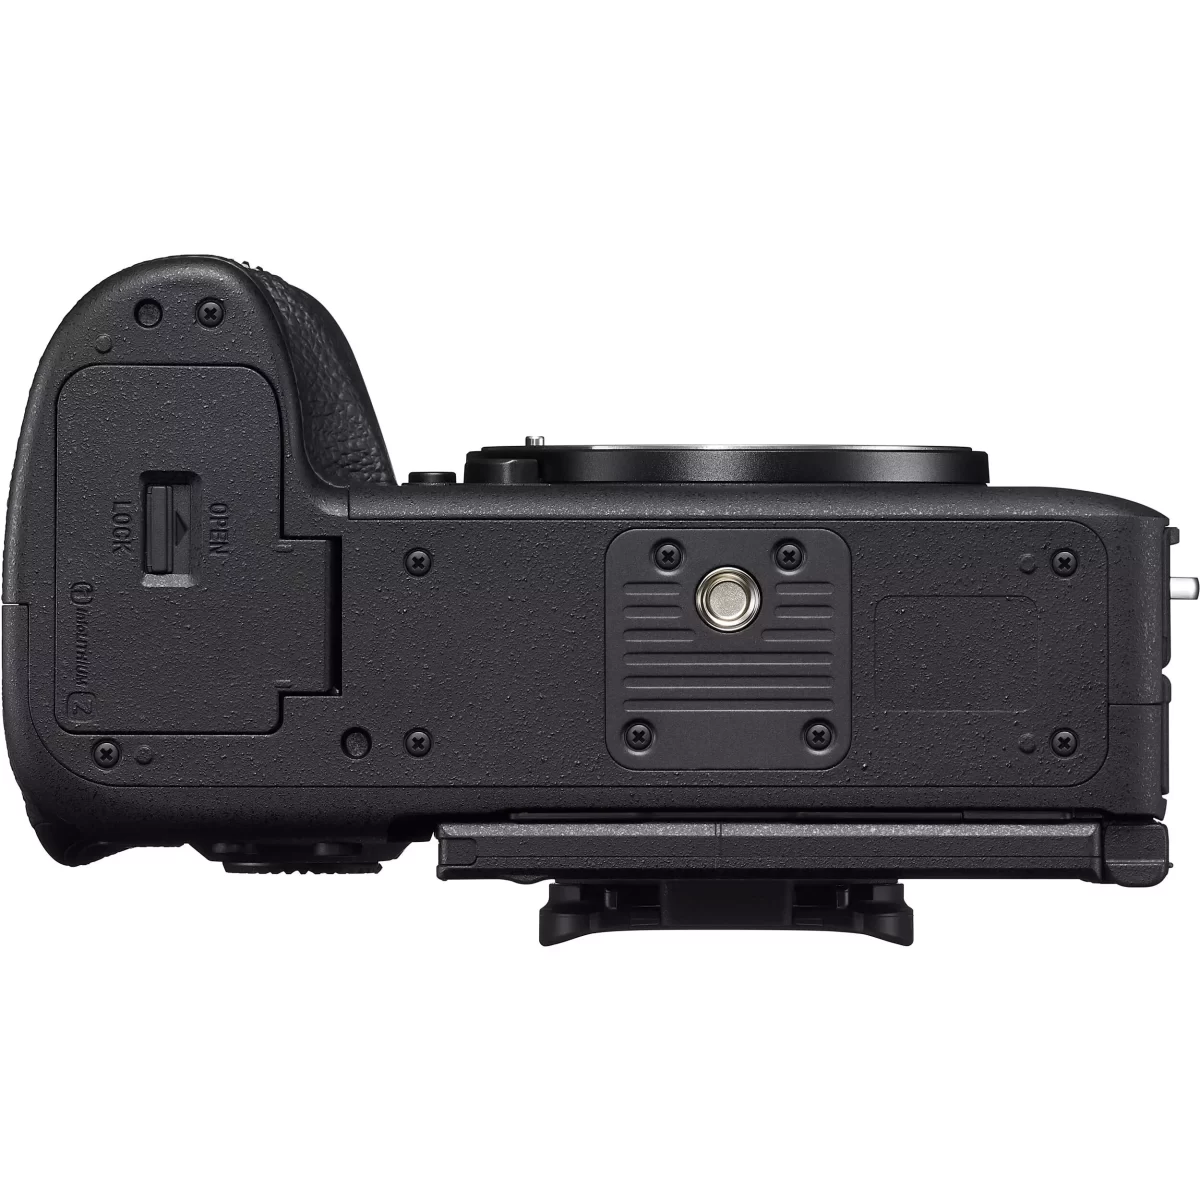 Sony a7R III Mirrorless Camera 16 1